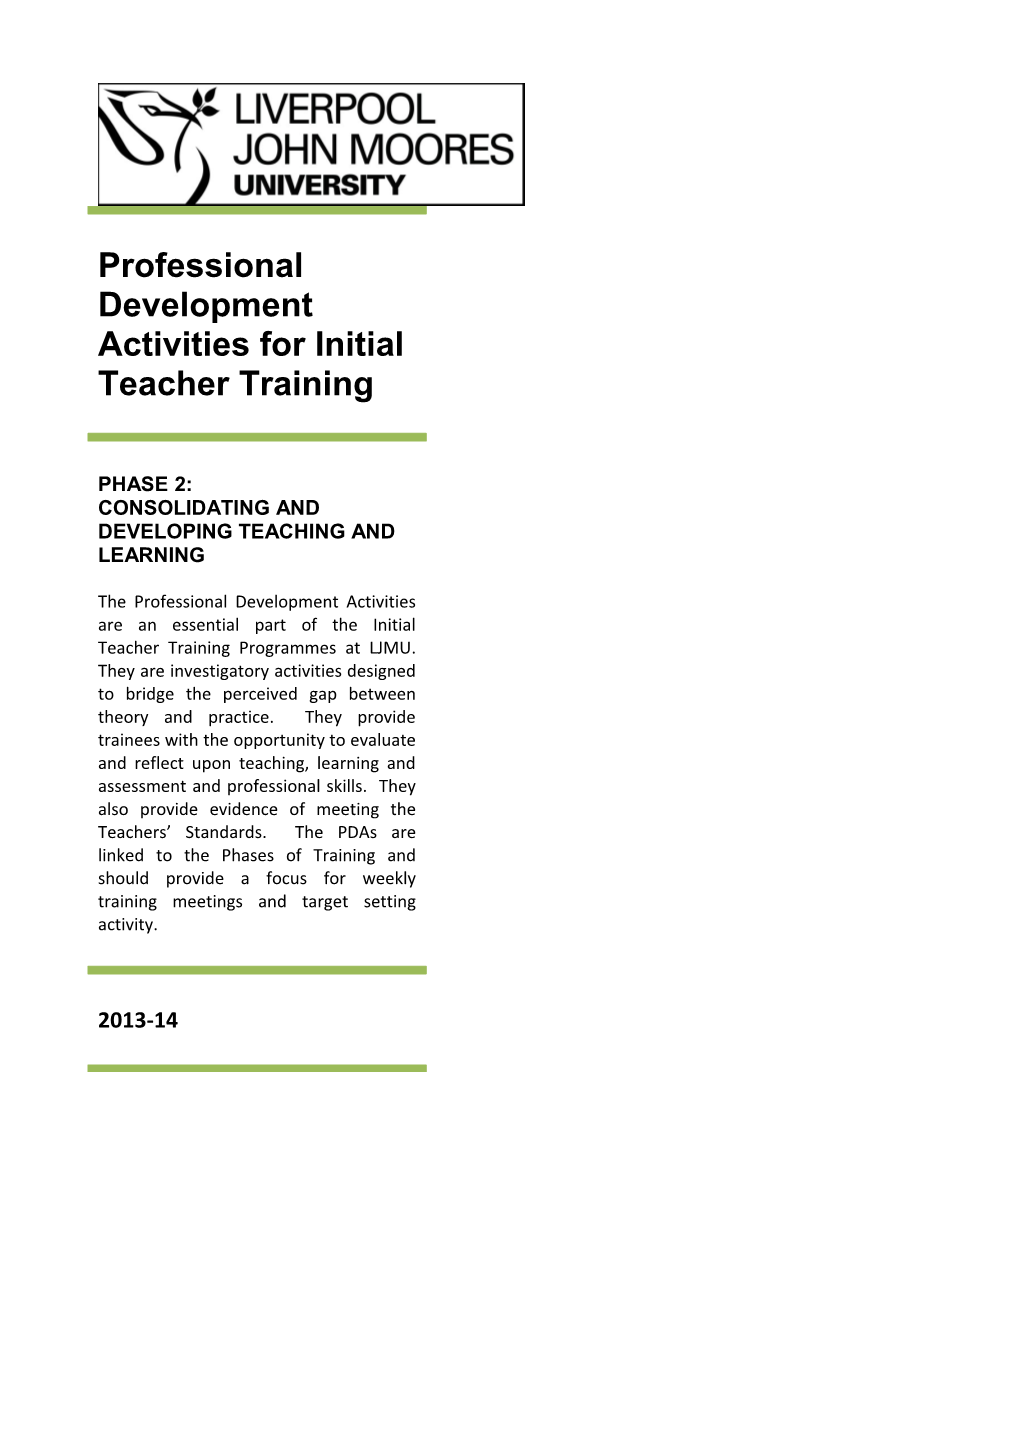 Professional Development Activities for Initial Teacher Training